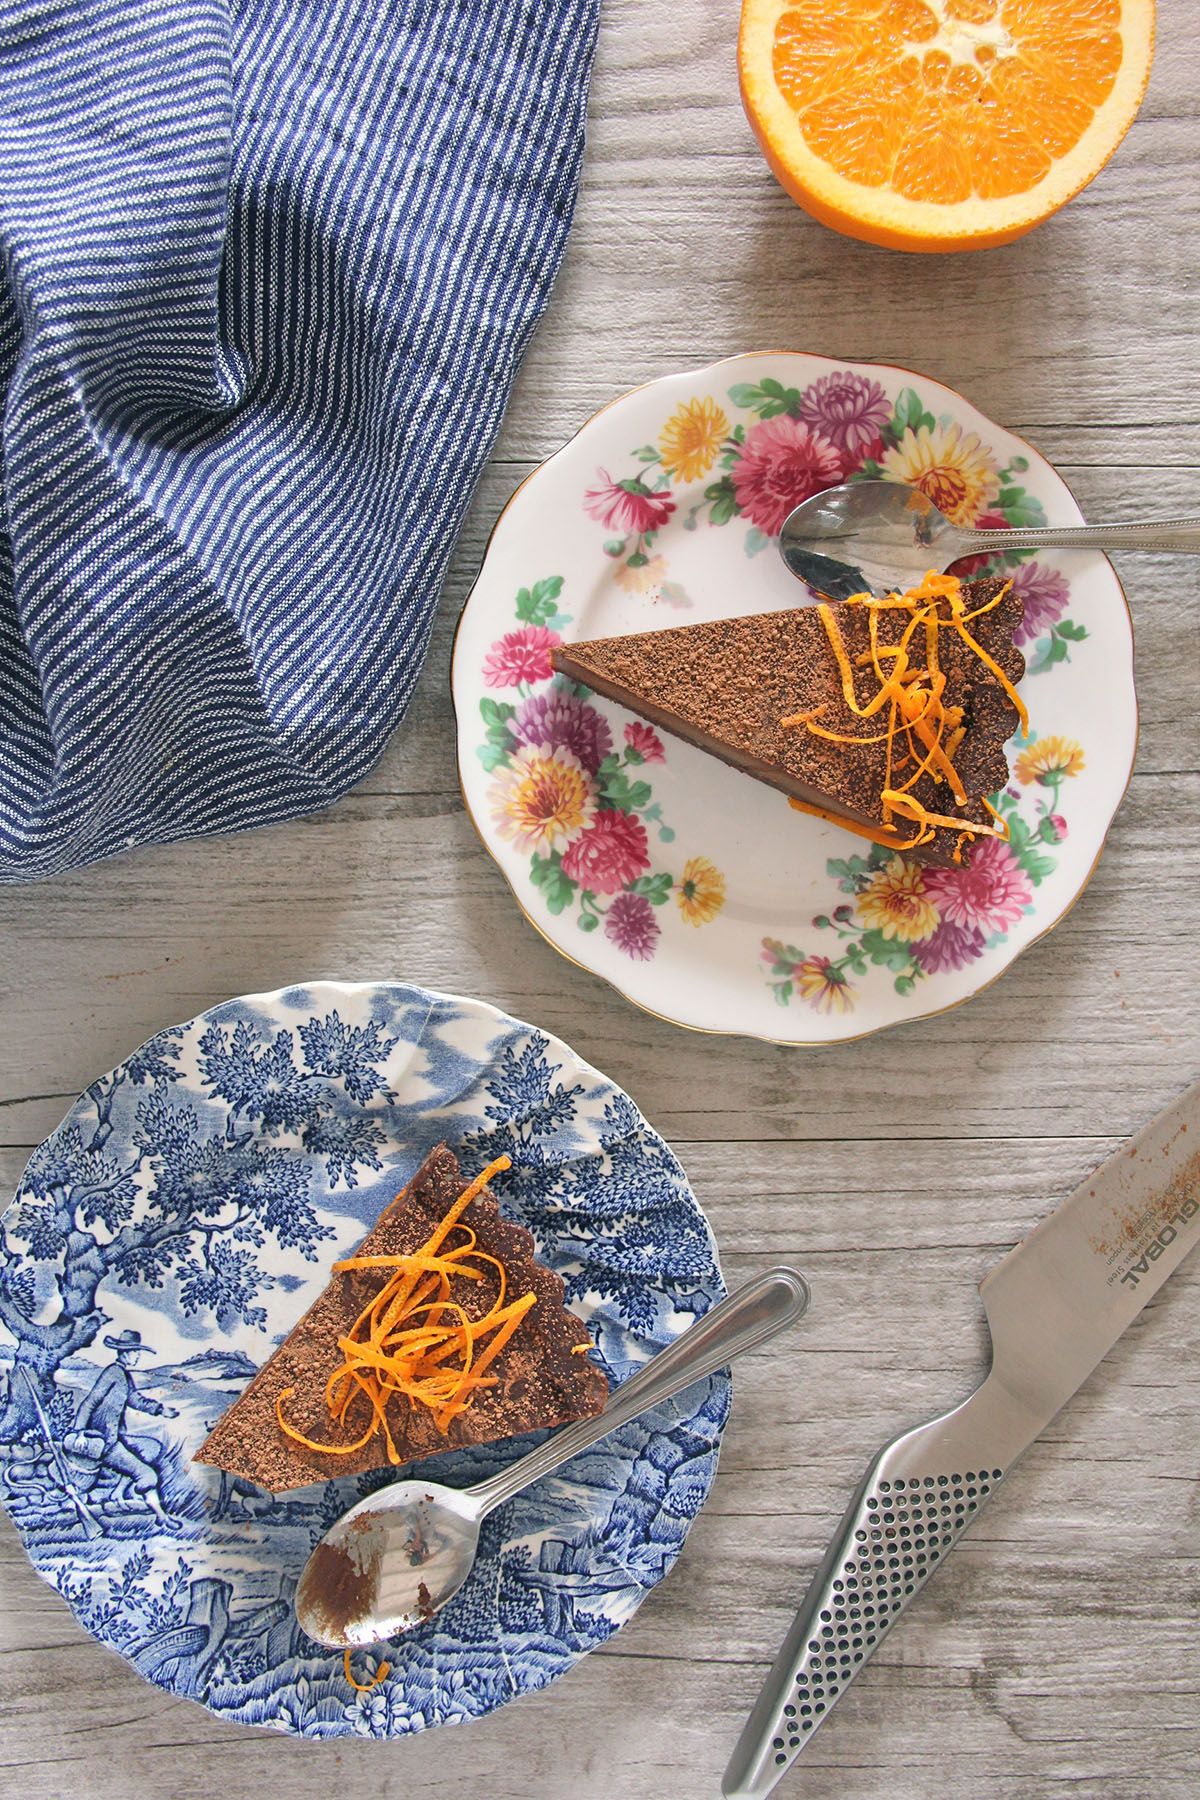 Chocolate Orange Tart recipe by Buffy Ellen of Be Good Organics